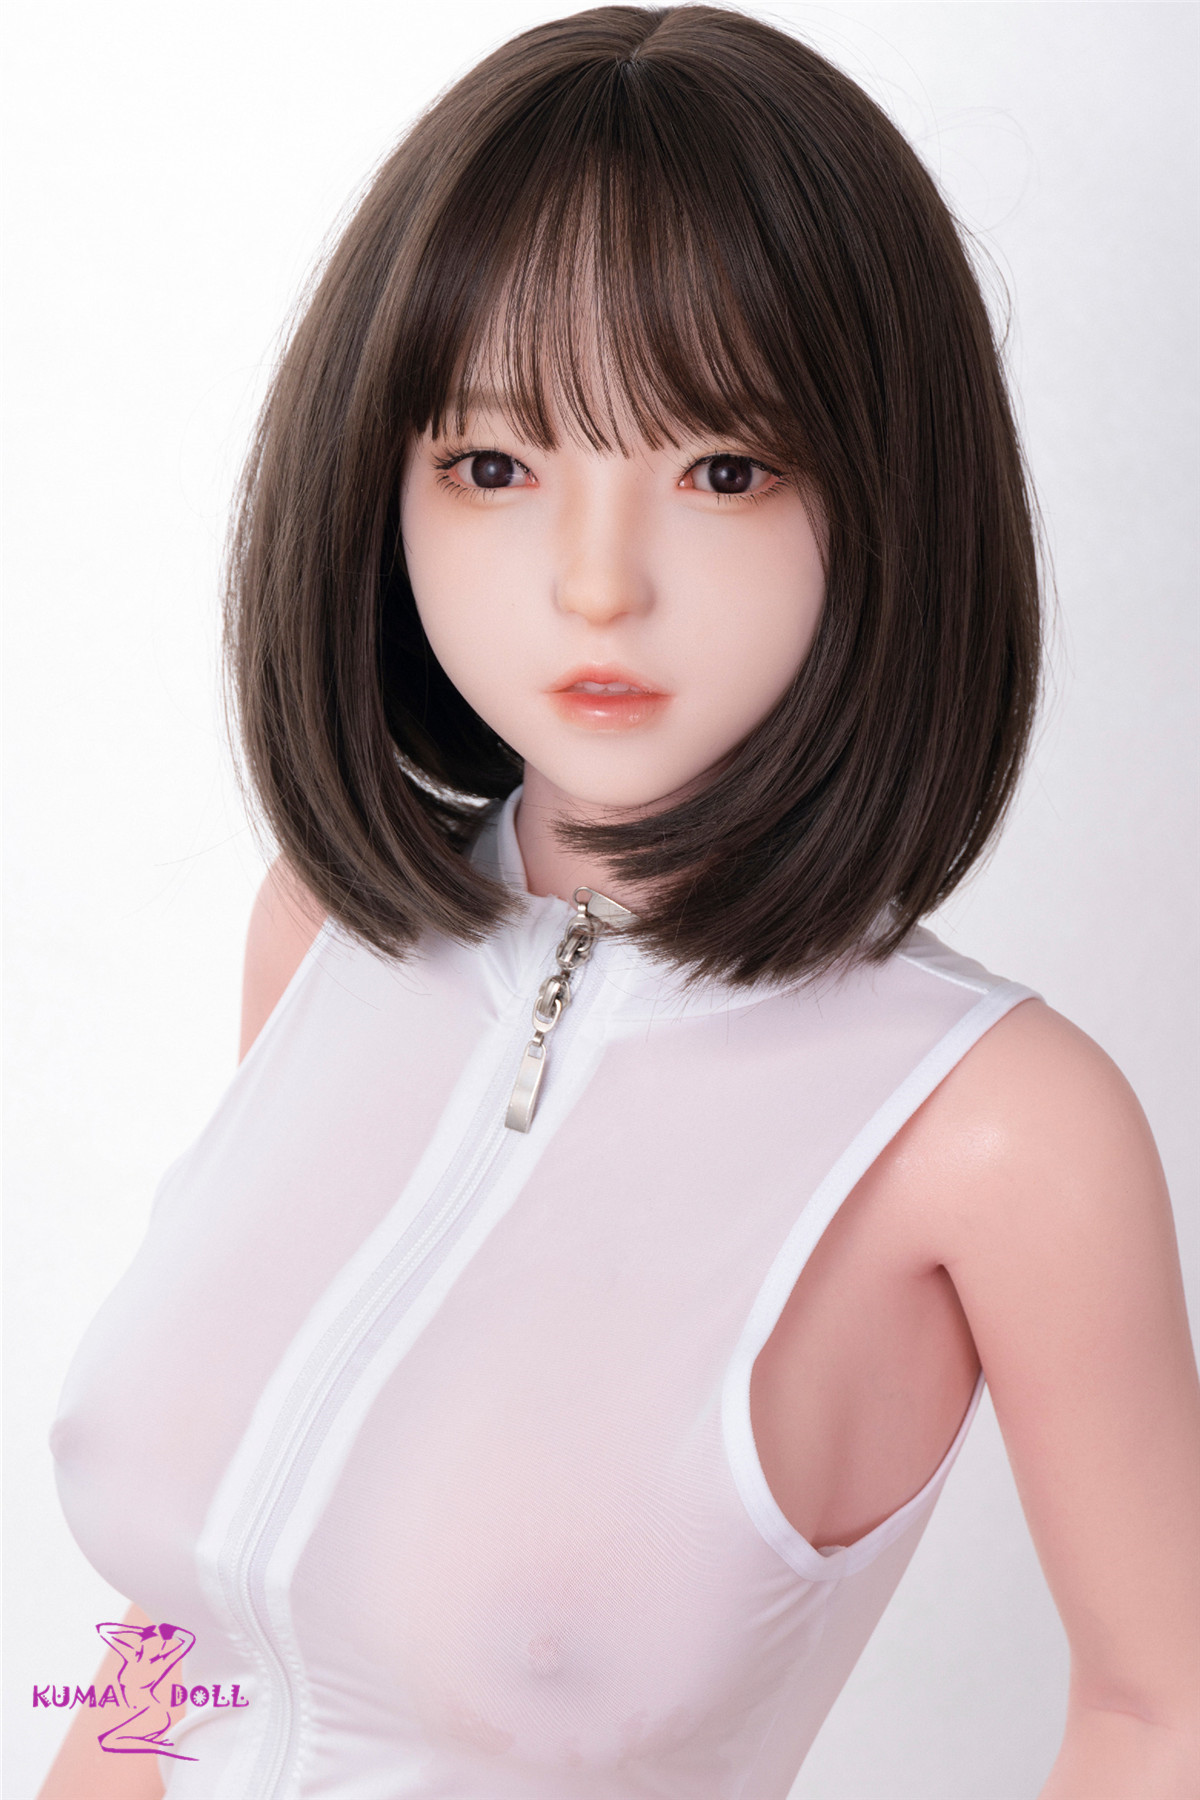 19kg lightweight 148 cmd cup M16 joint general-purpose full doll for adult Art Giken (ART-doll) new M3 head